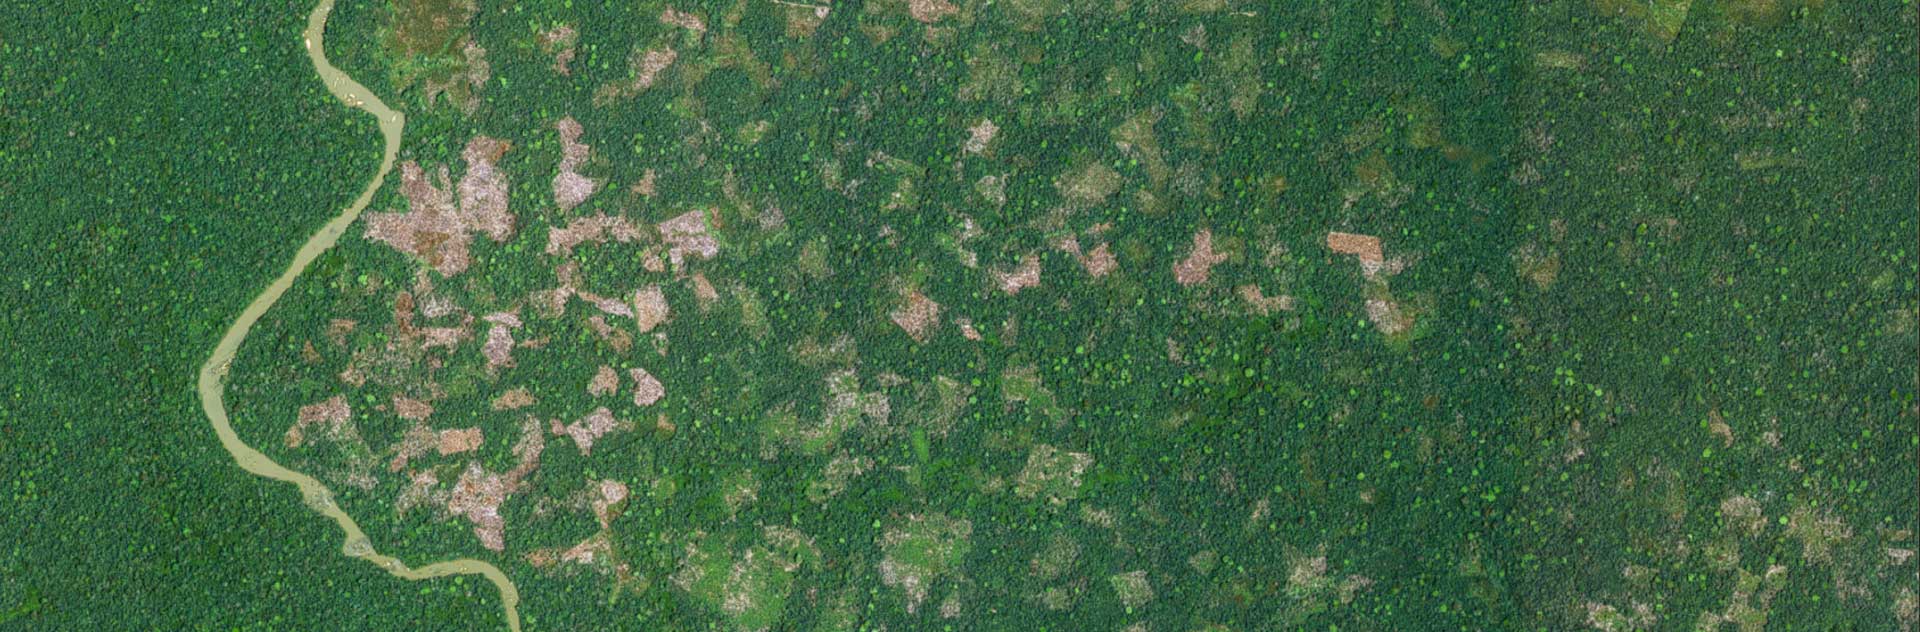 Satellite Image Pléiades,  Ivory Coast Tempo Liberia Forest  February 2019 - 50cm resolution